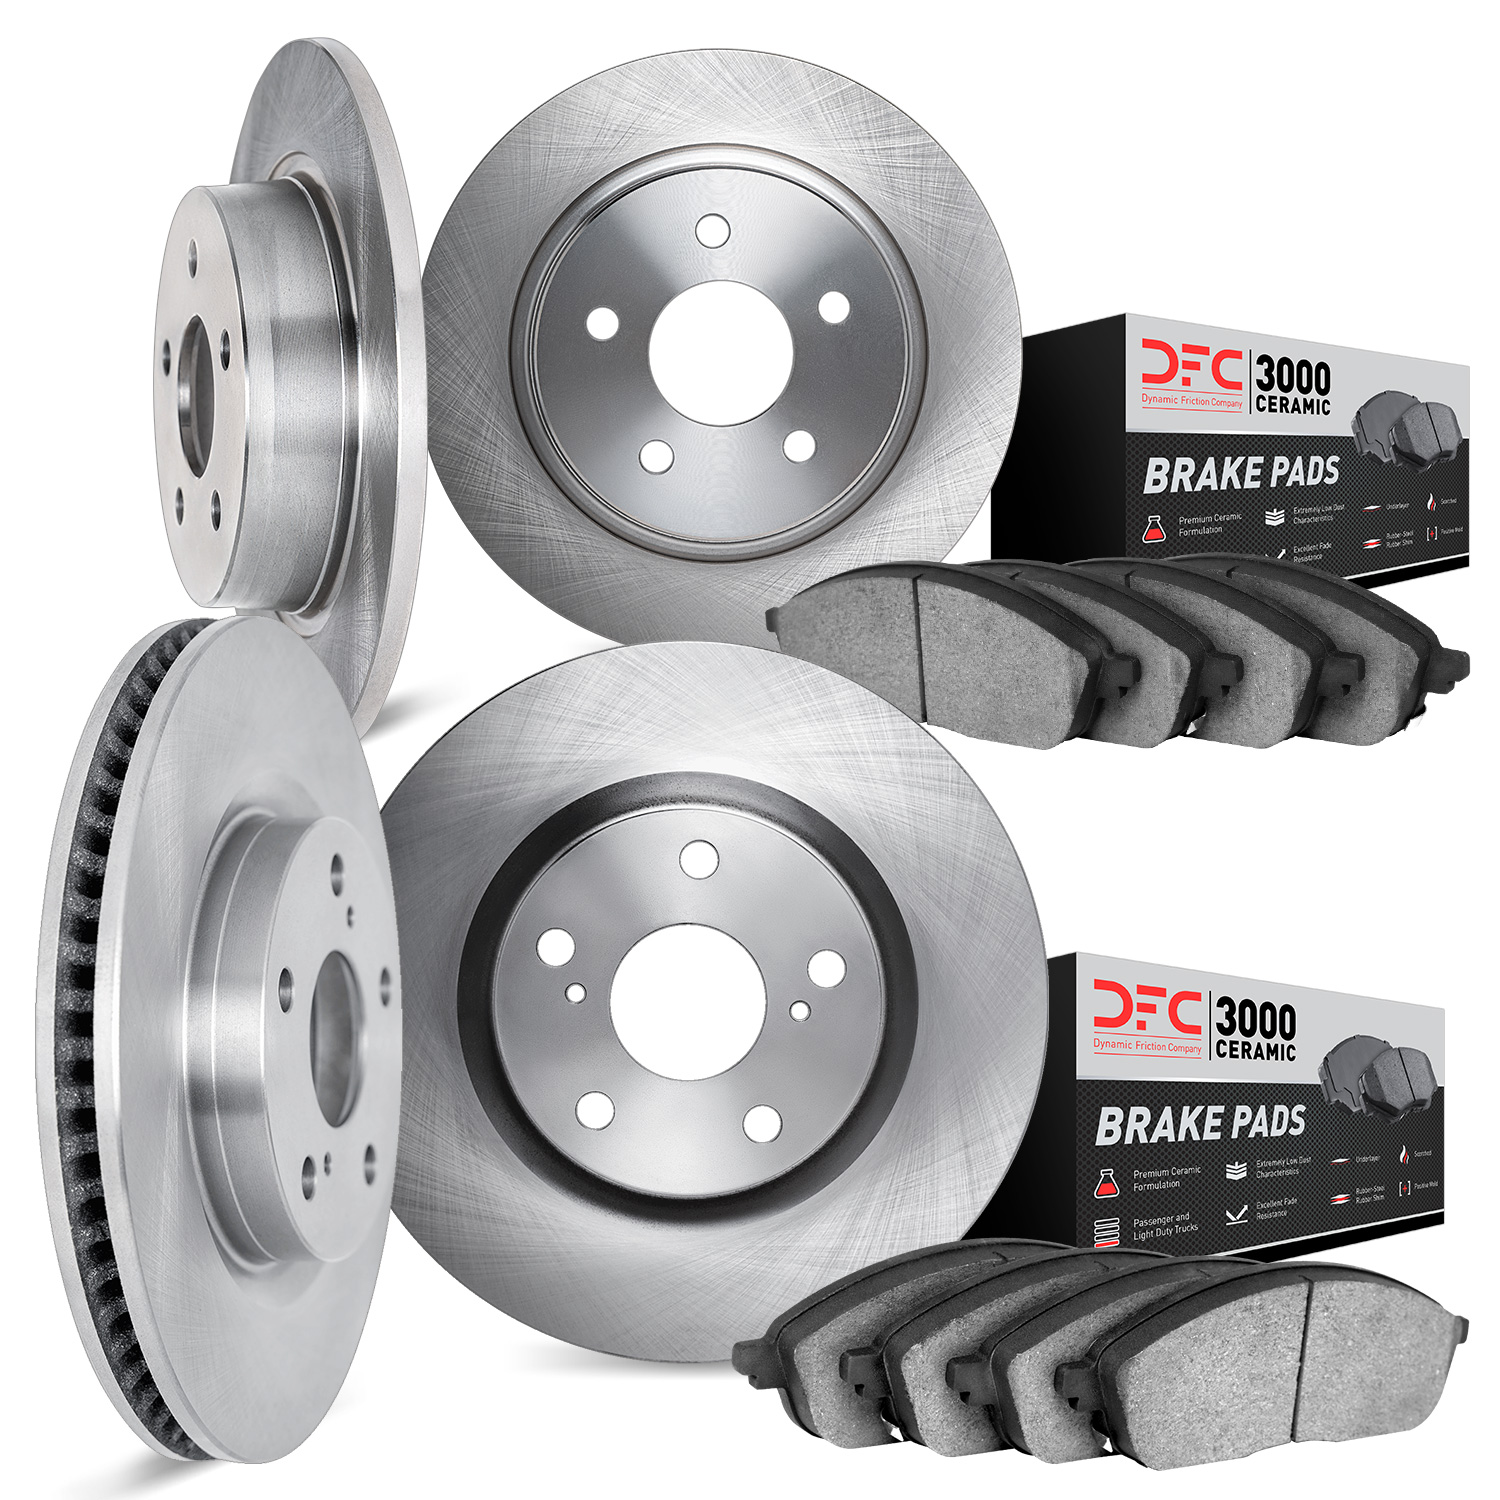 6304-13049 Brake Rotors with 3000-Series Ceramic Brake Pads Kit, Fits Select Subaru, Position: Front and Rear